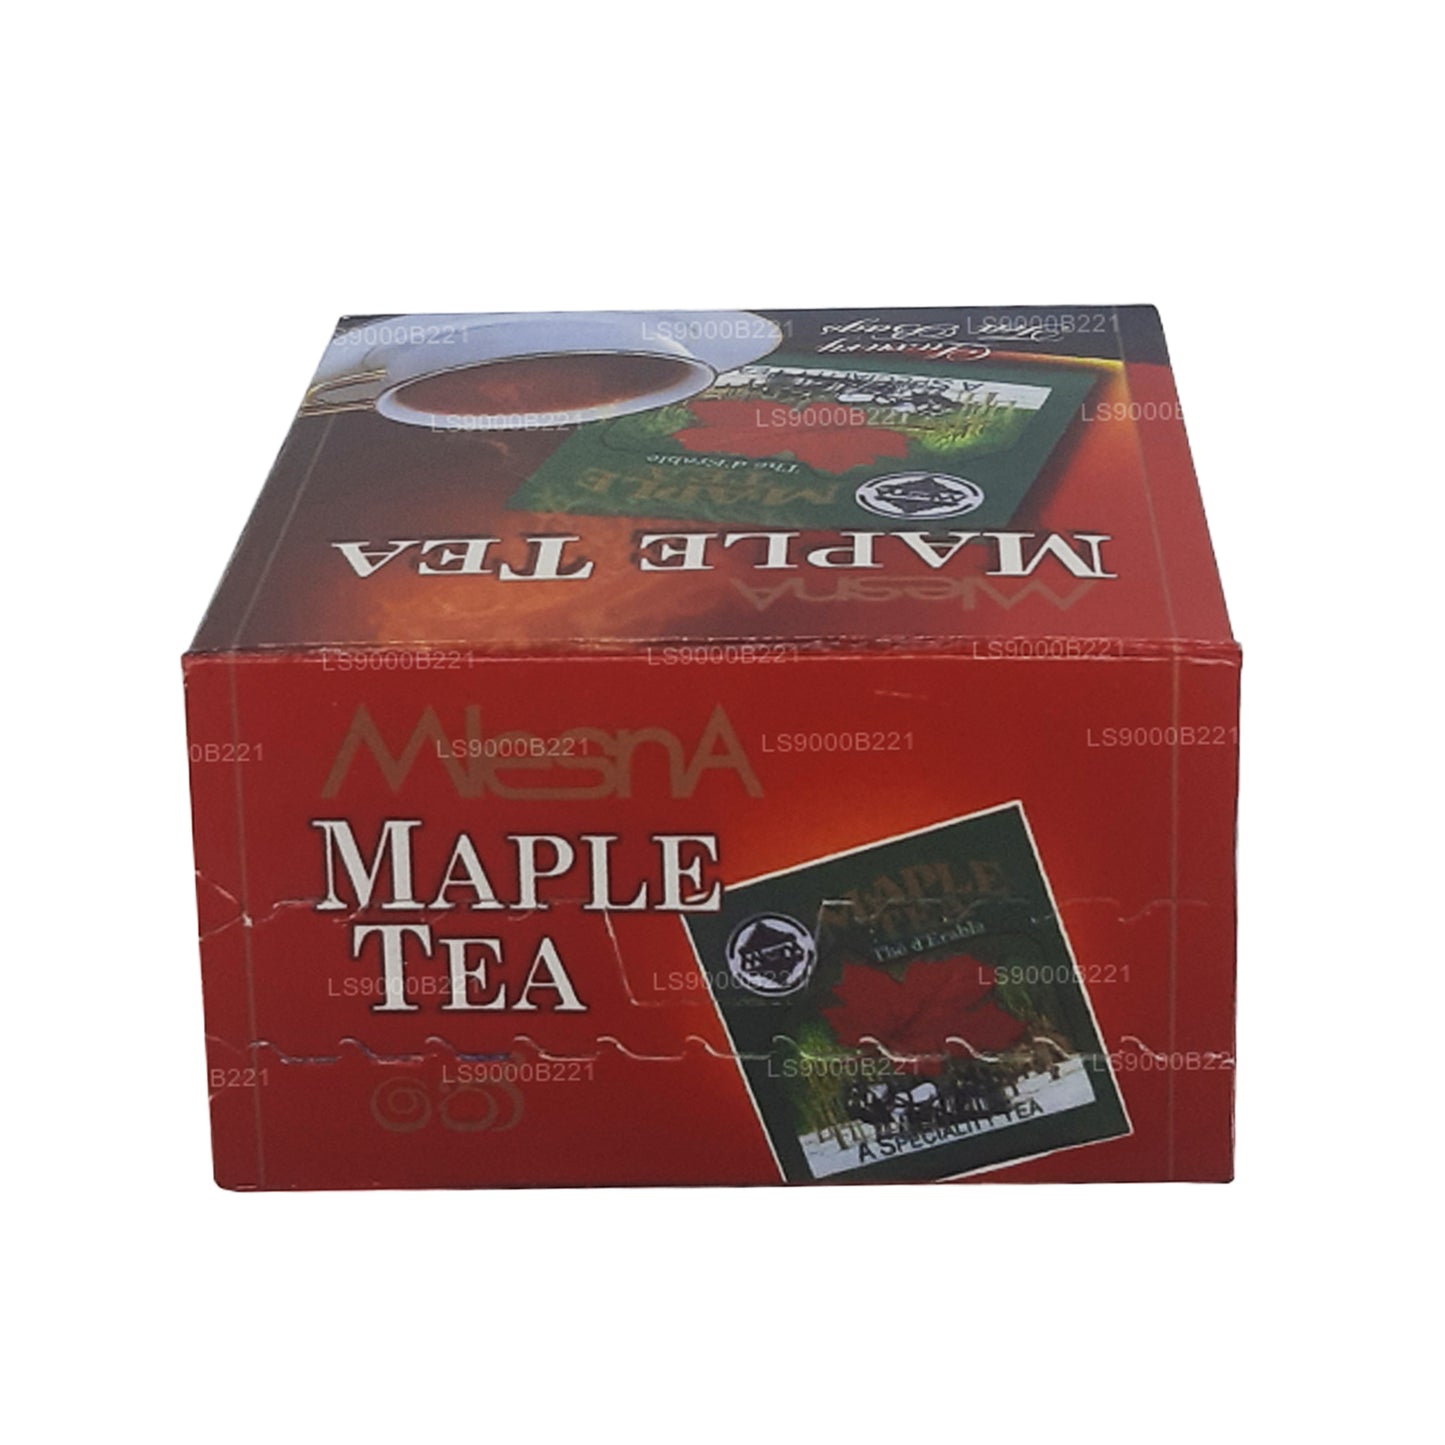 Mlesna Maple Tea (20g) 10 Luxury Tea Bags